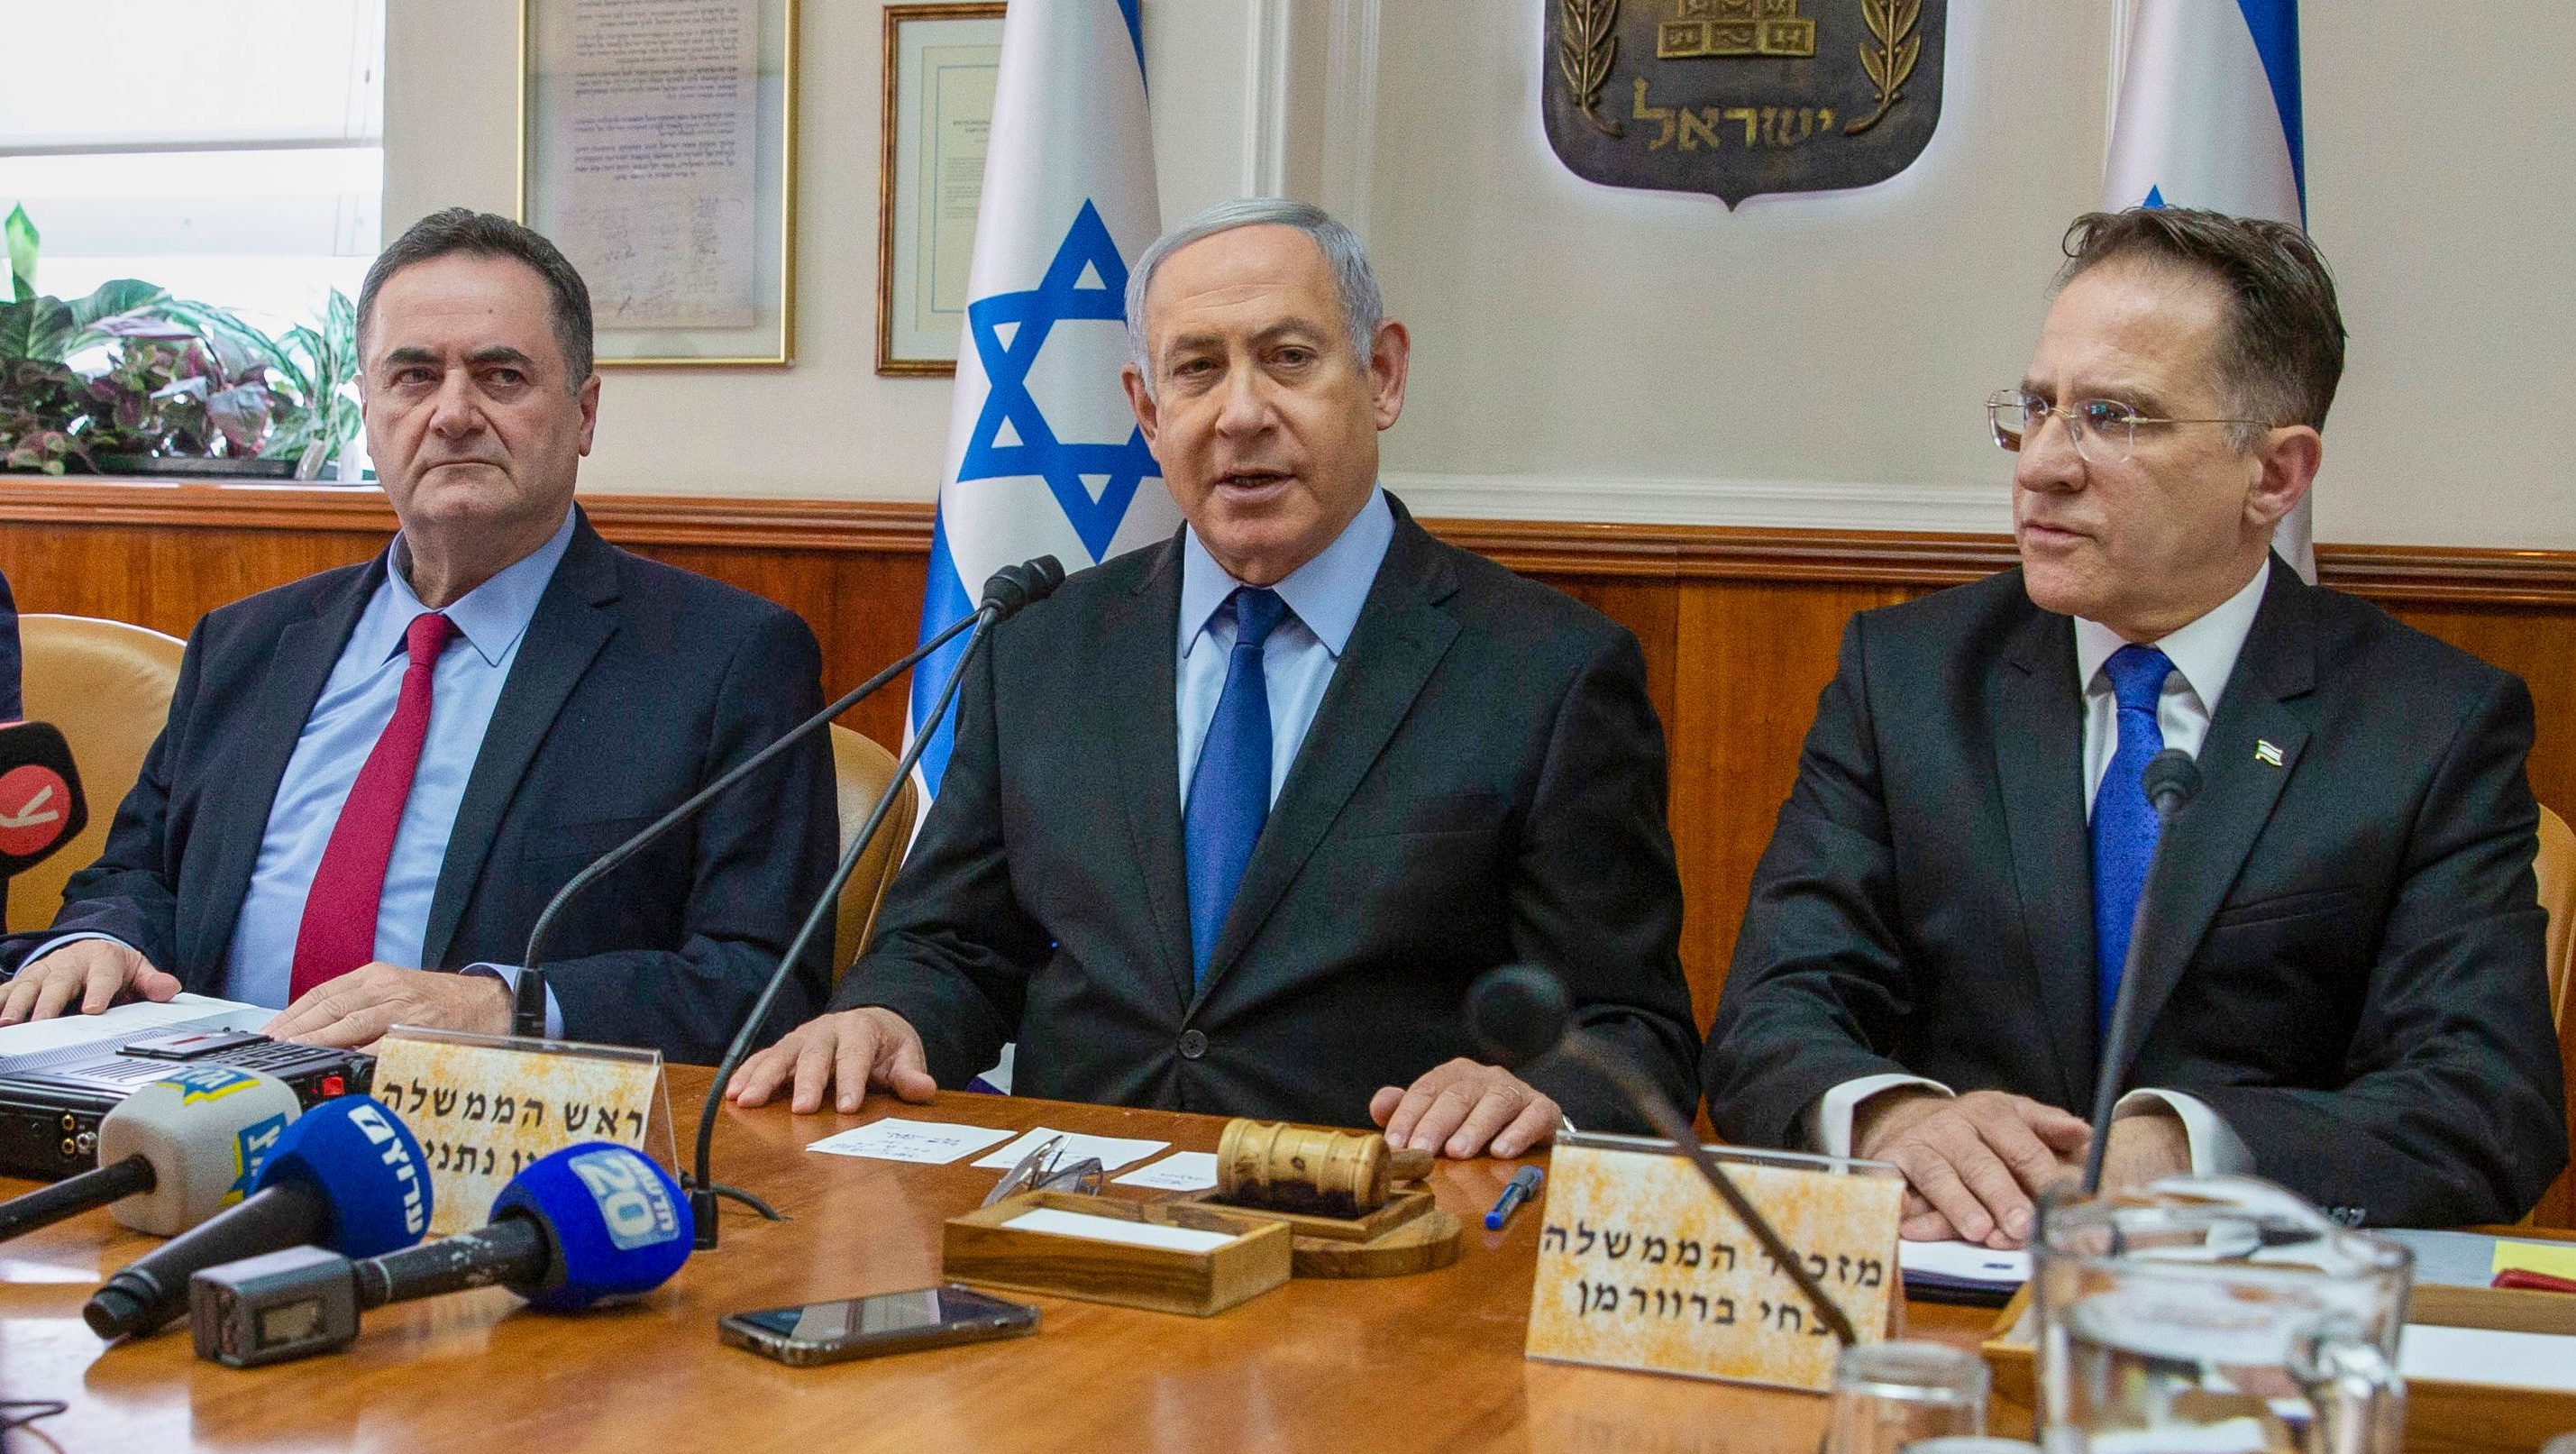 Netanyahu Allies to Boycott Legislative Panel Debating Immunity Request